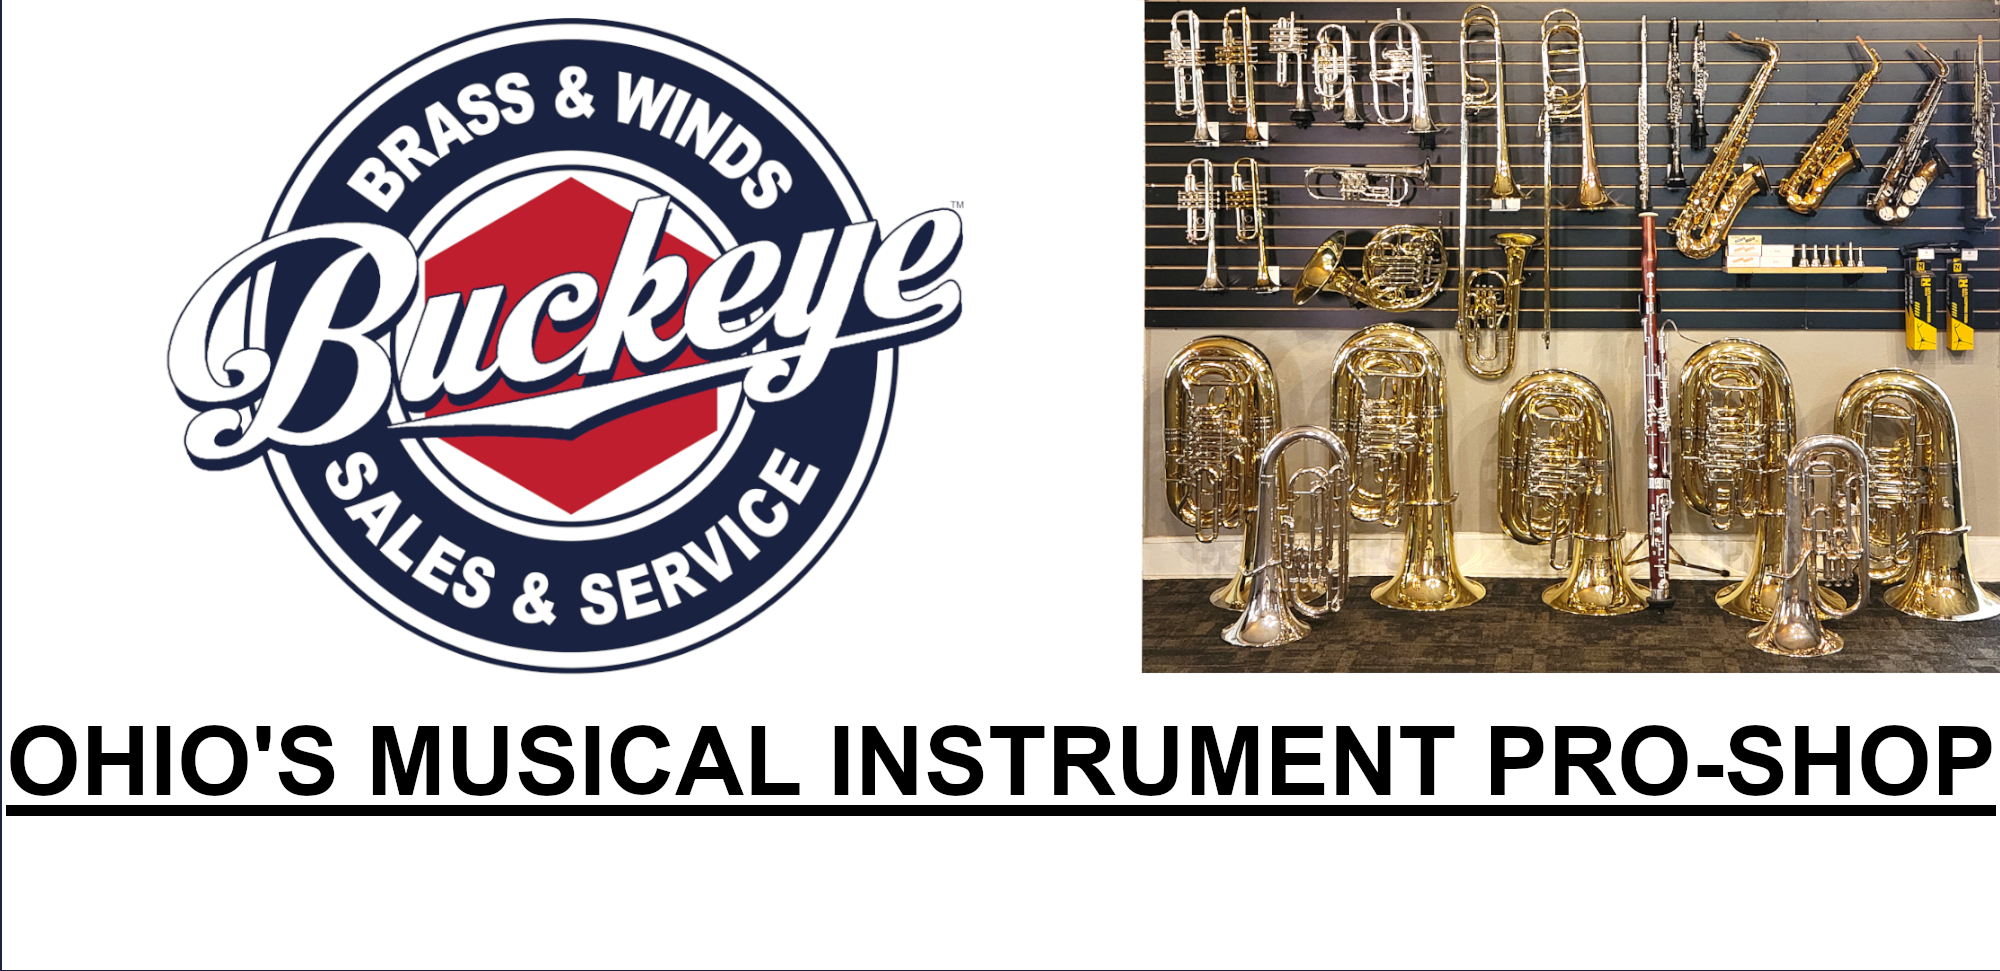 Happy International Tuba Day, from Buckeye Brass and Winds!